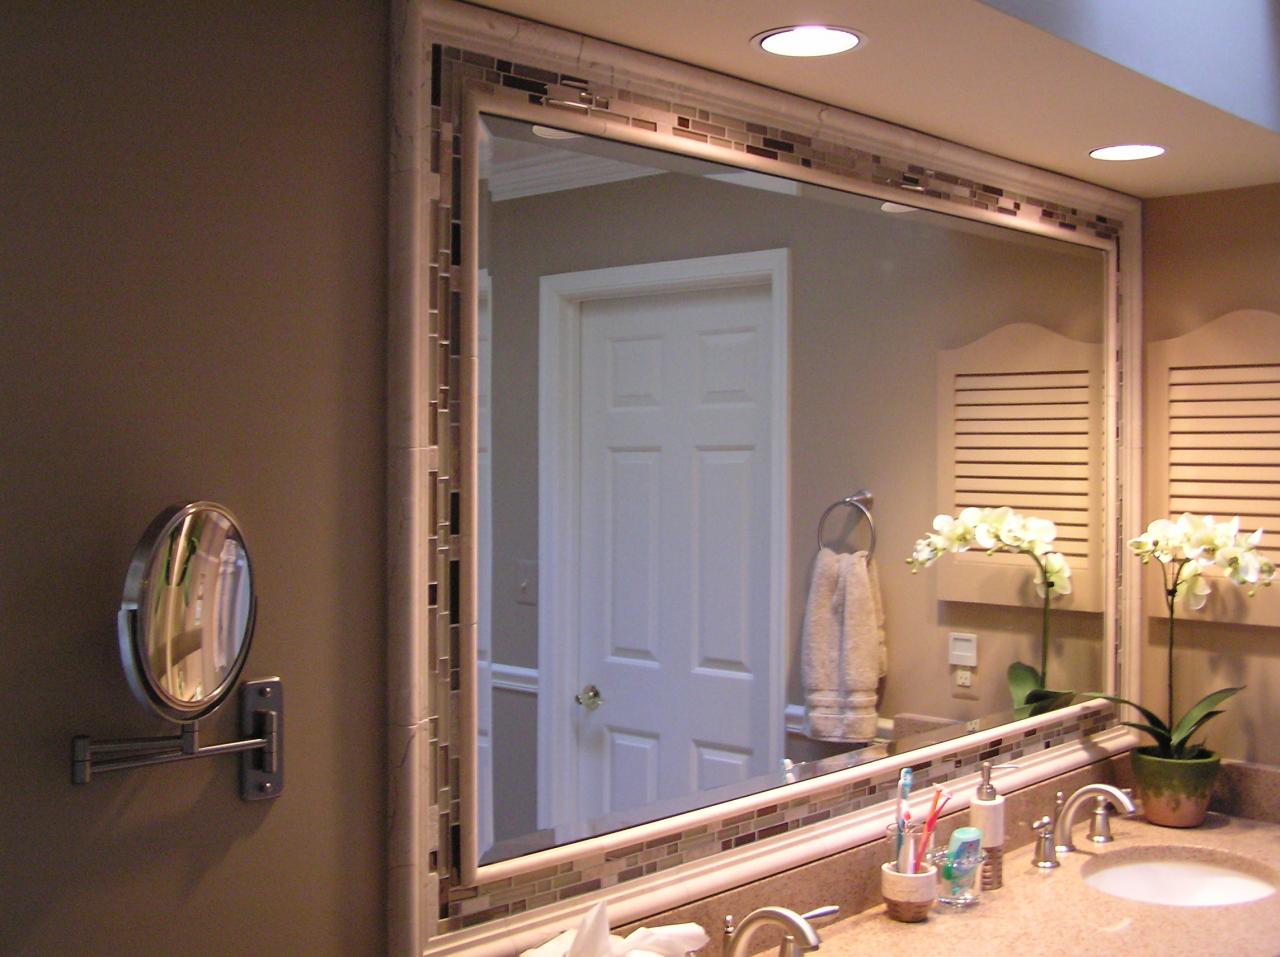 Bathroom vanity mirror ideas large and beautiful photos. Photo to